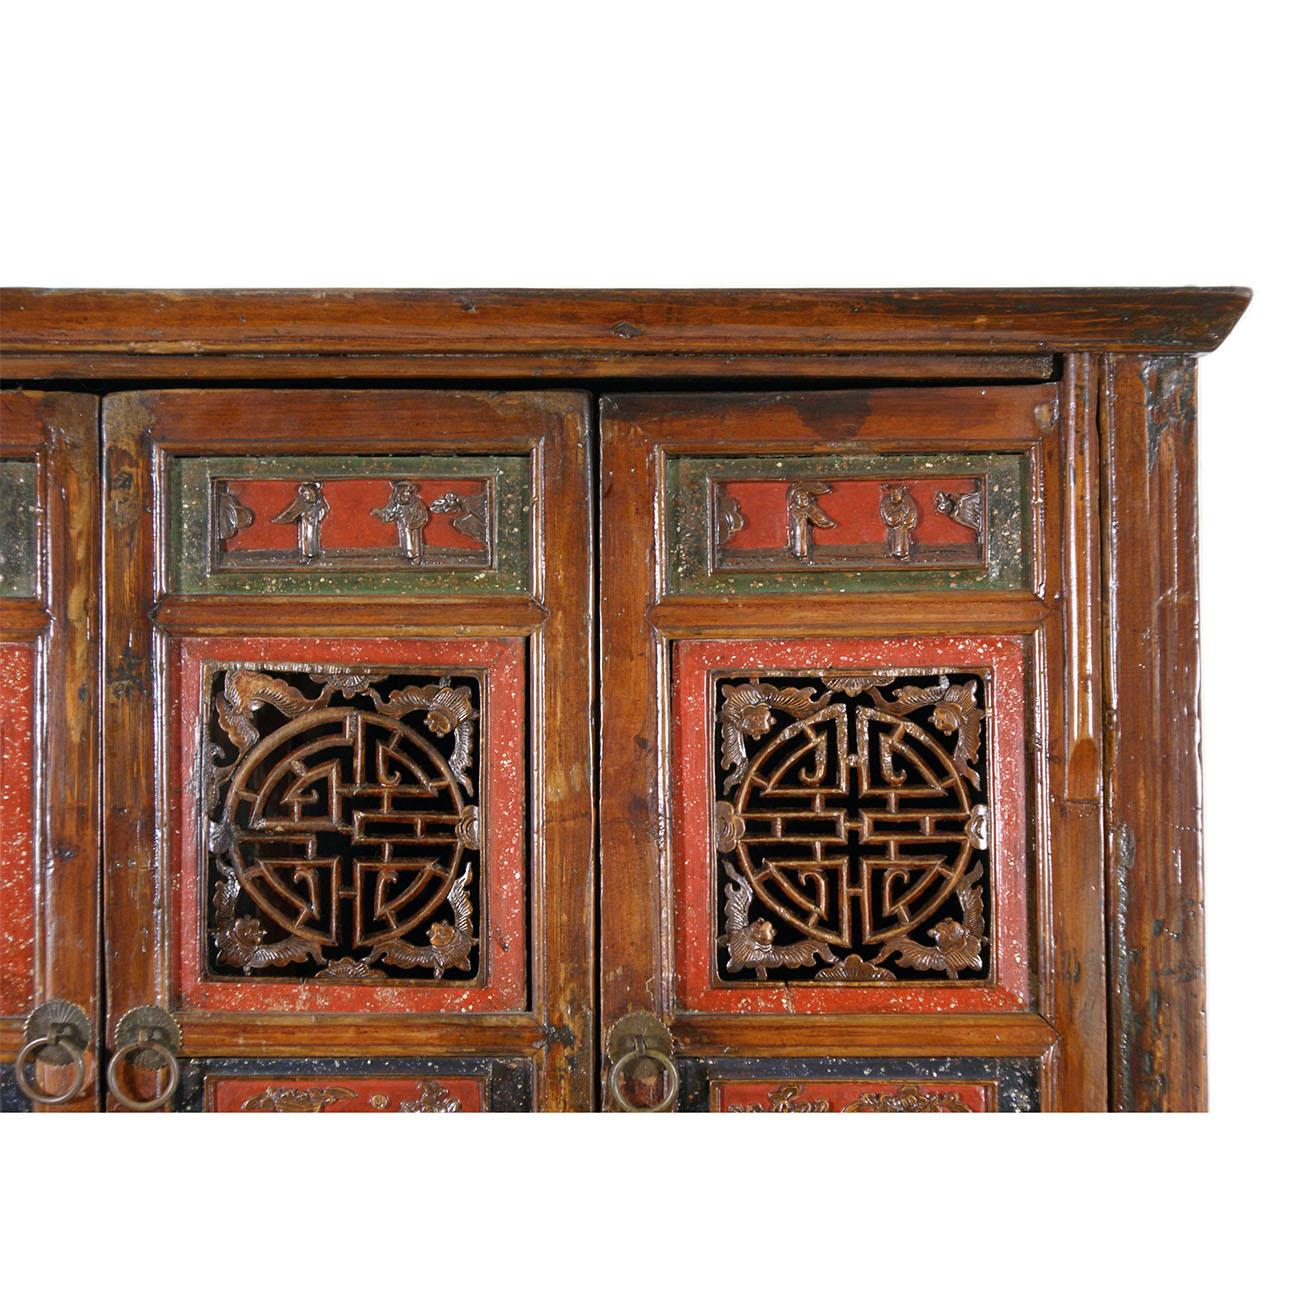 Fir 19 Century Antique Chinese Kitchen Cabinet, Entertainment Center